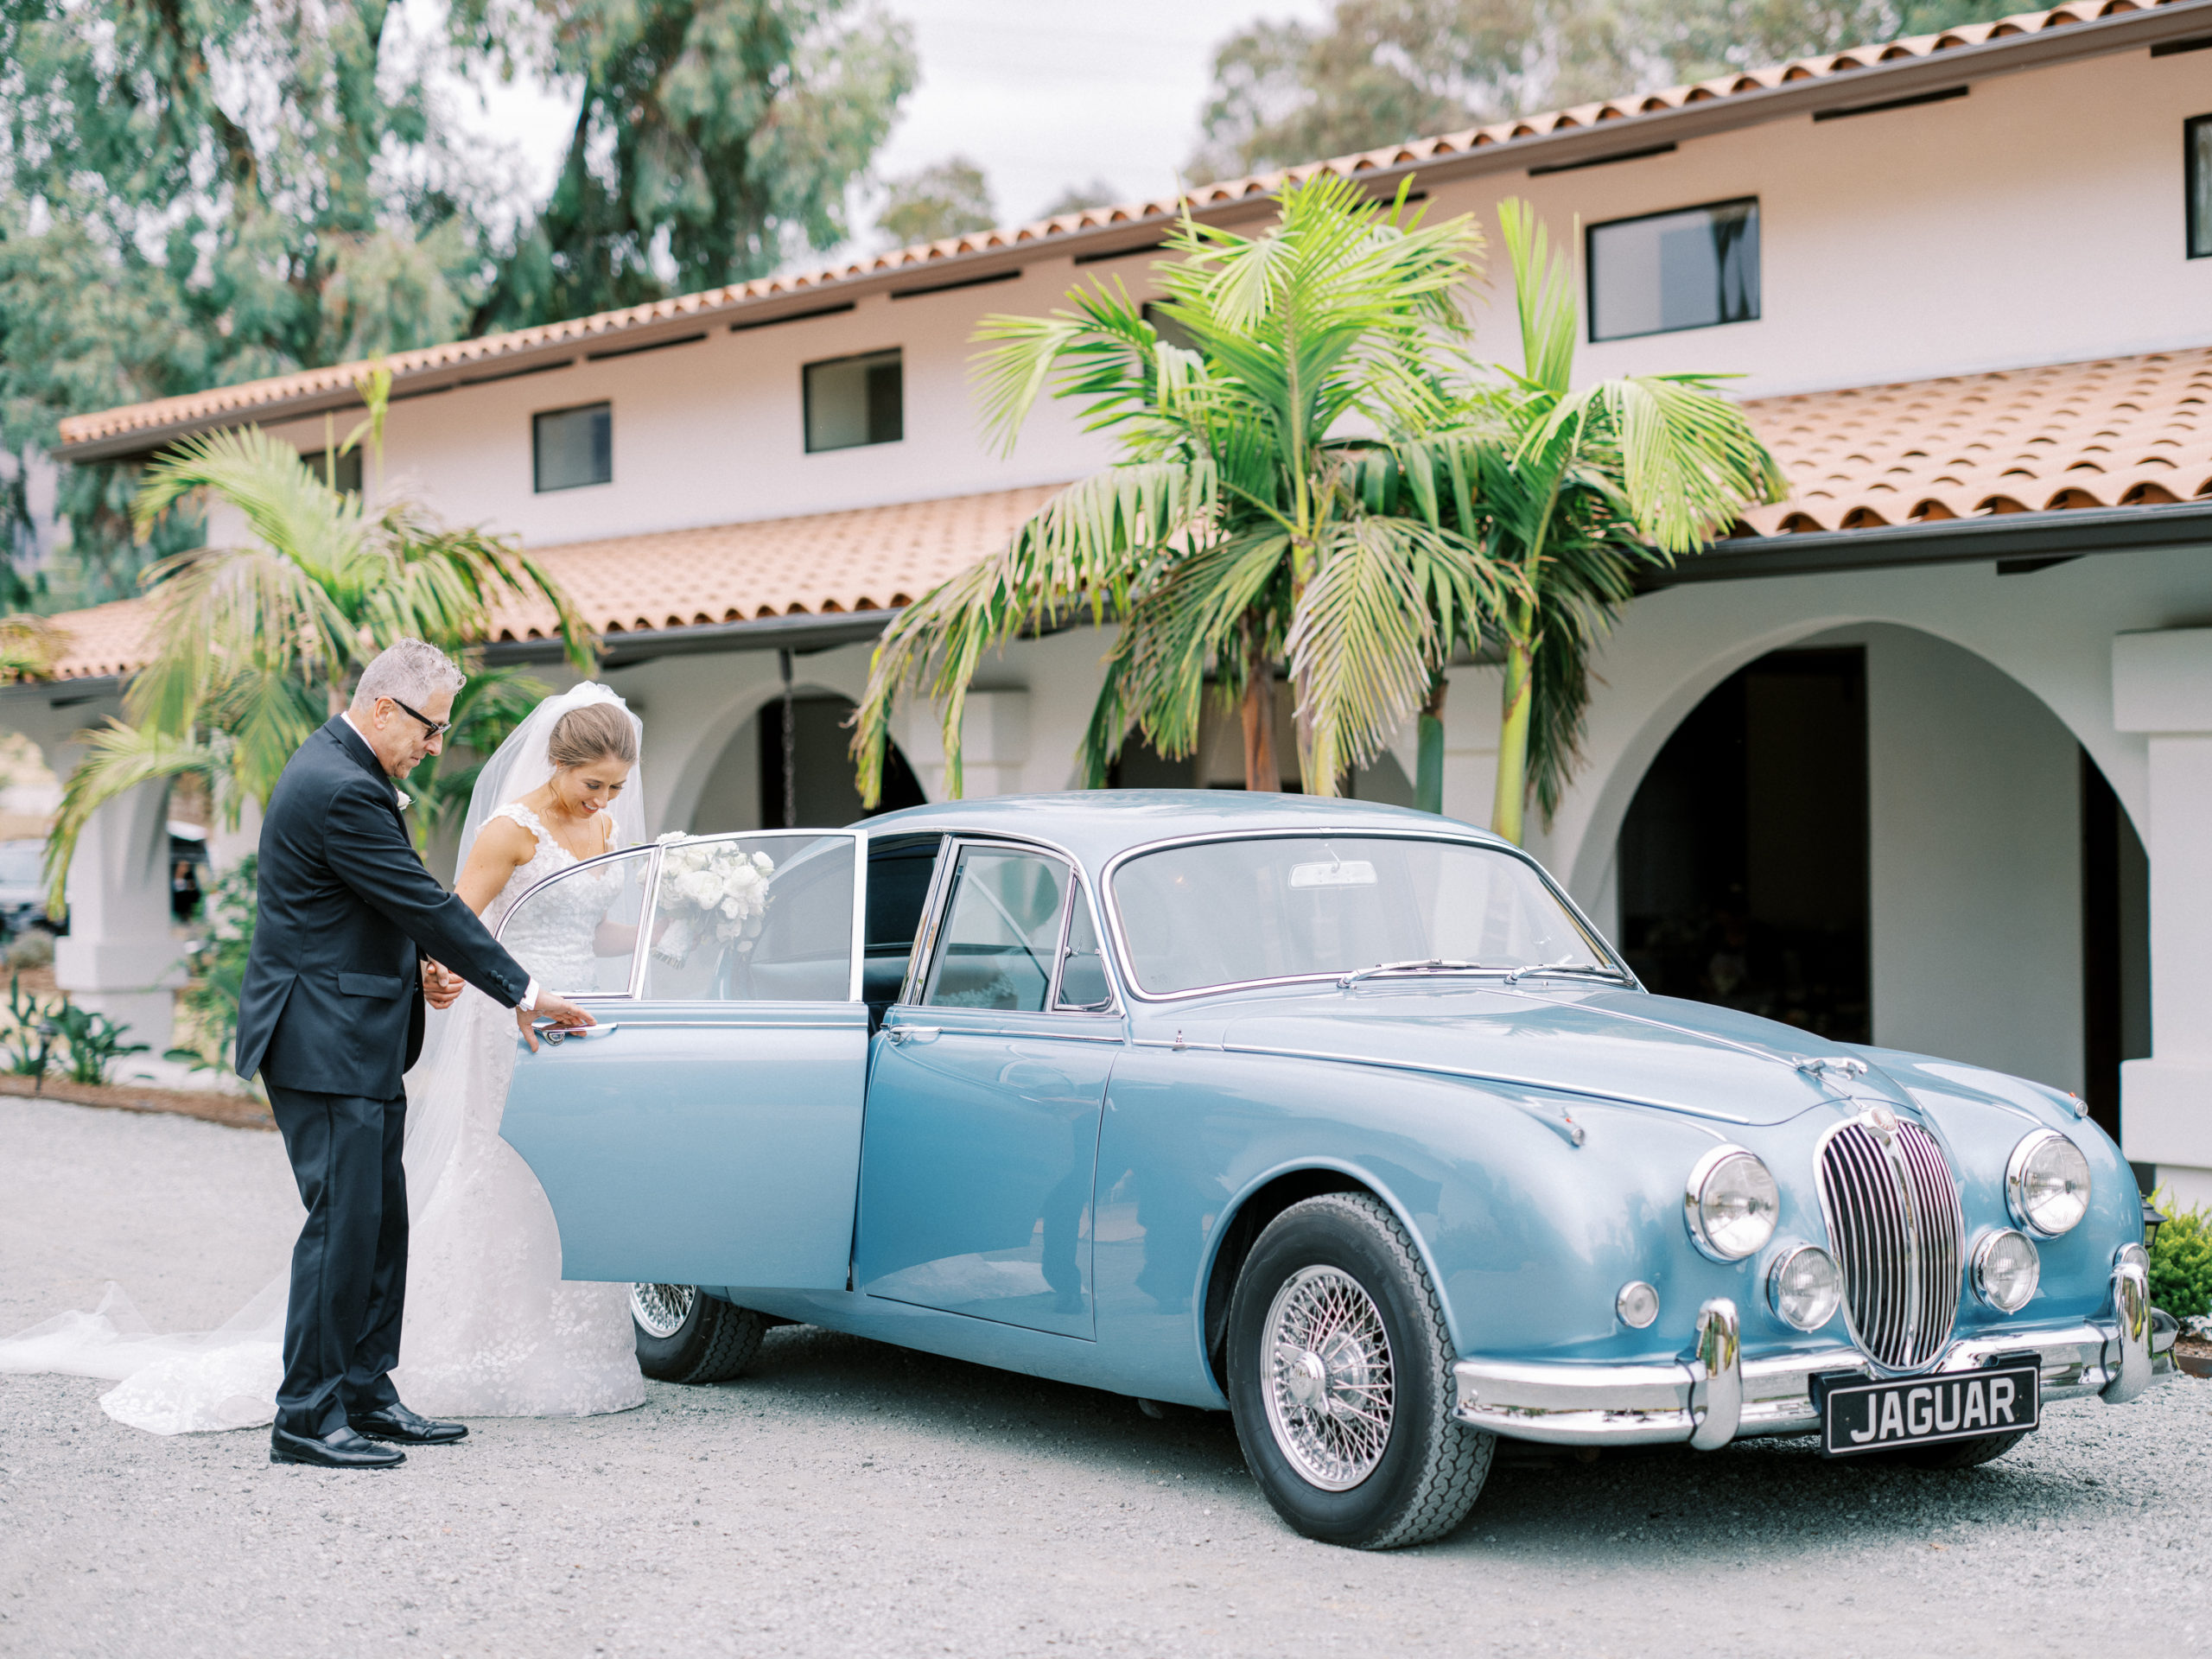 Vintage 1962 Jaguar takes the bride to her ceremony from La lomita ranch wedding